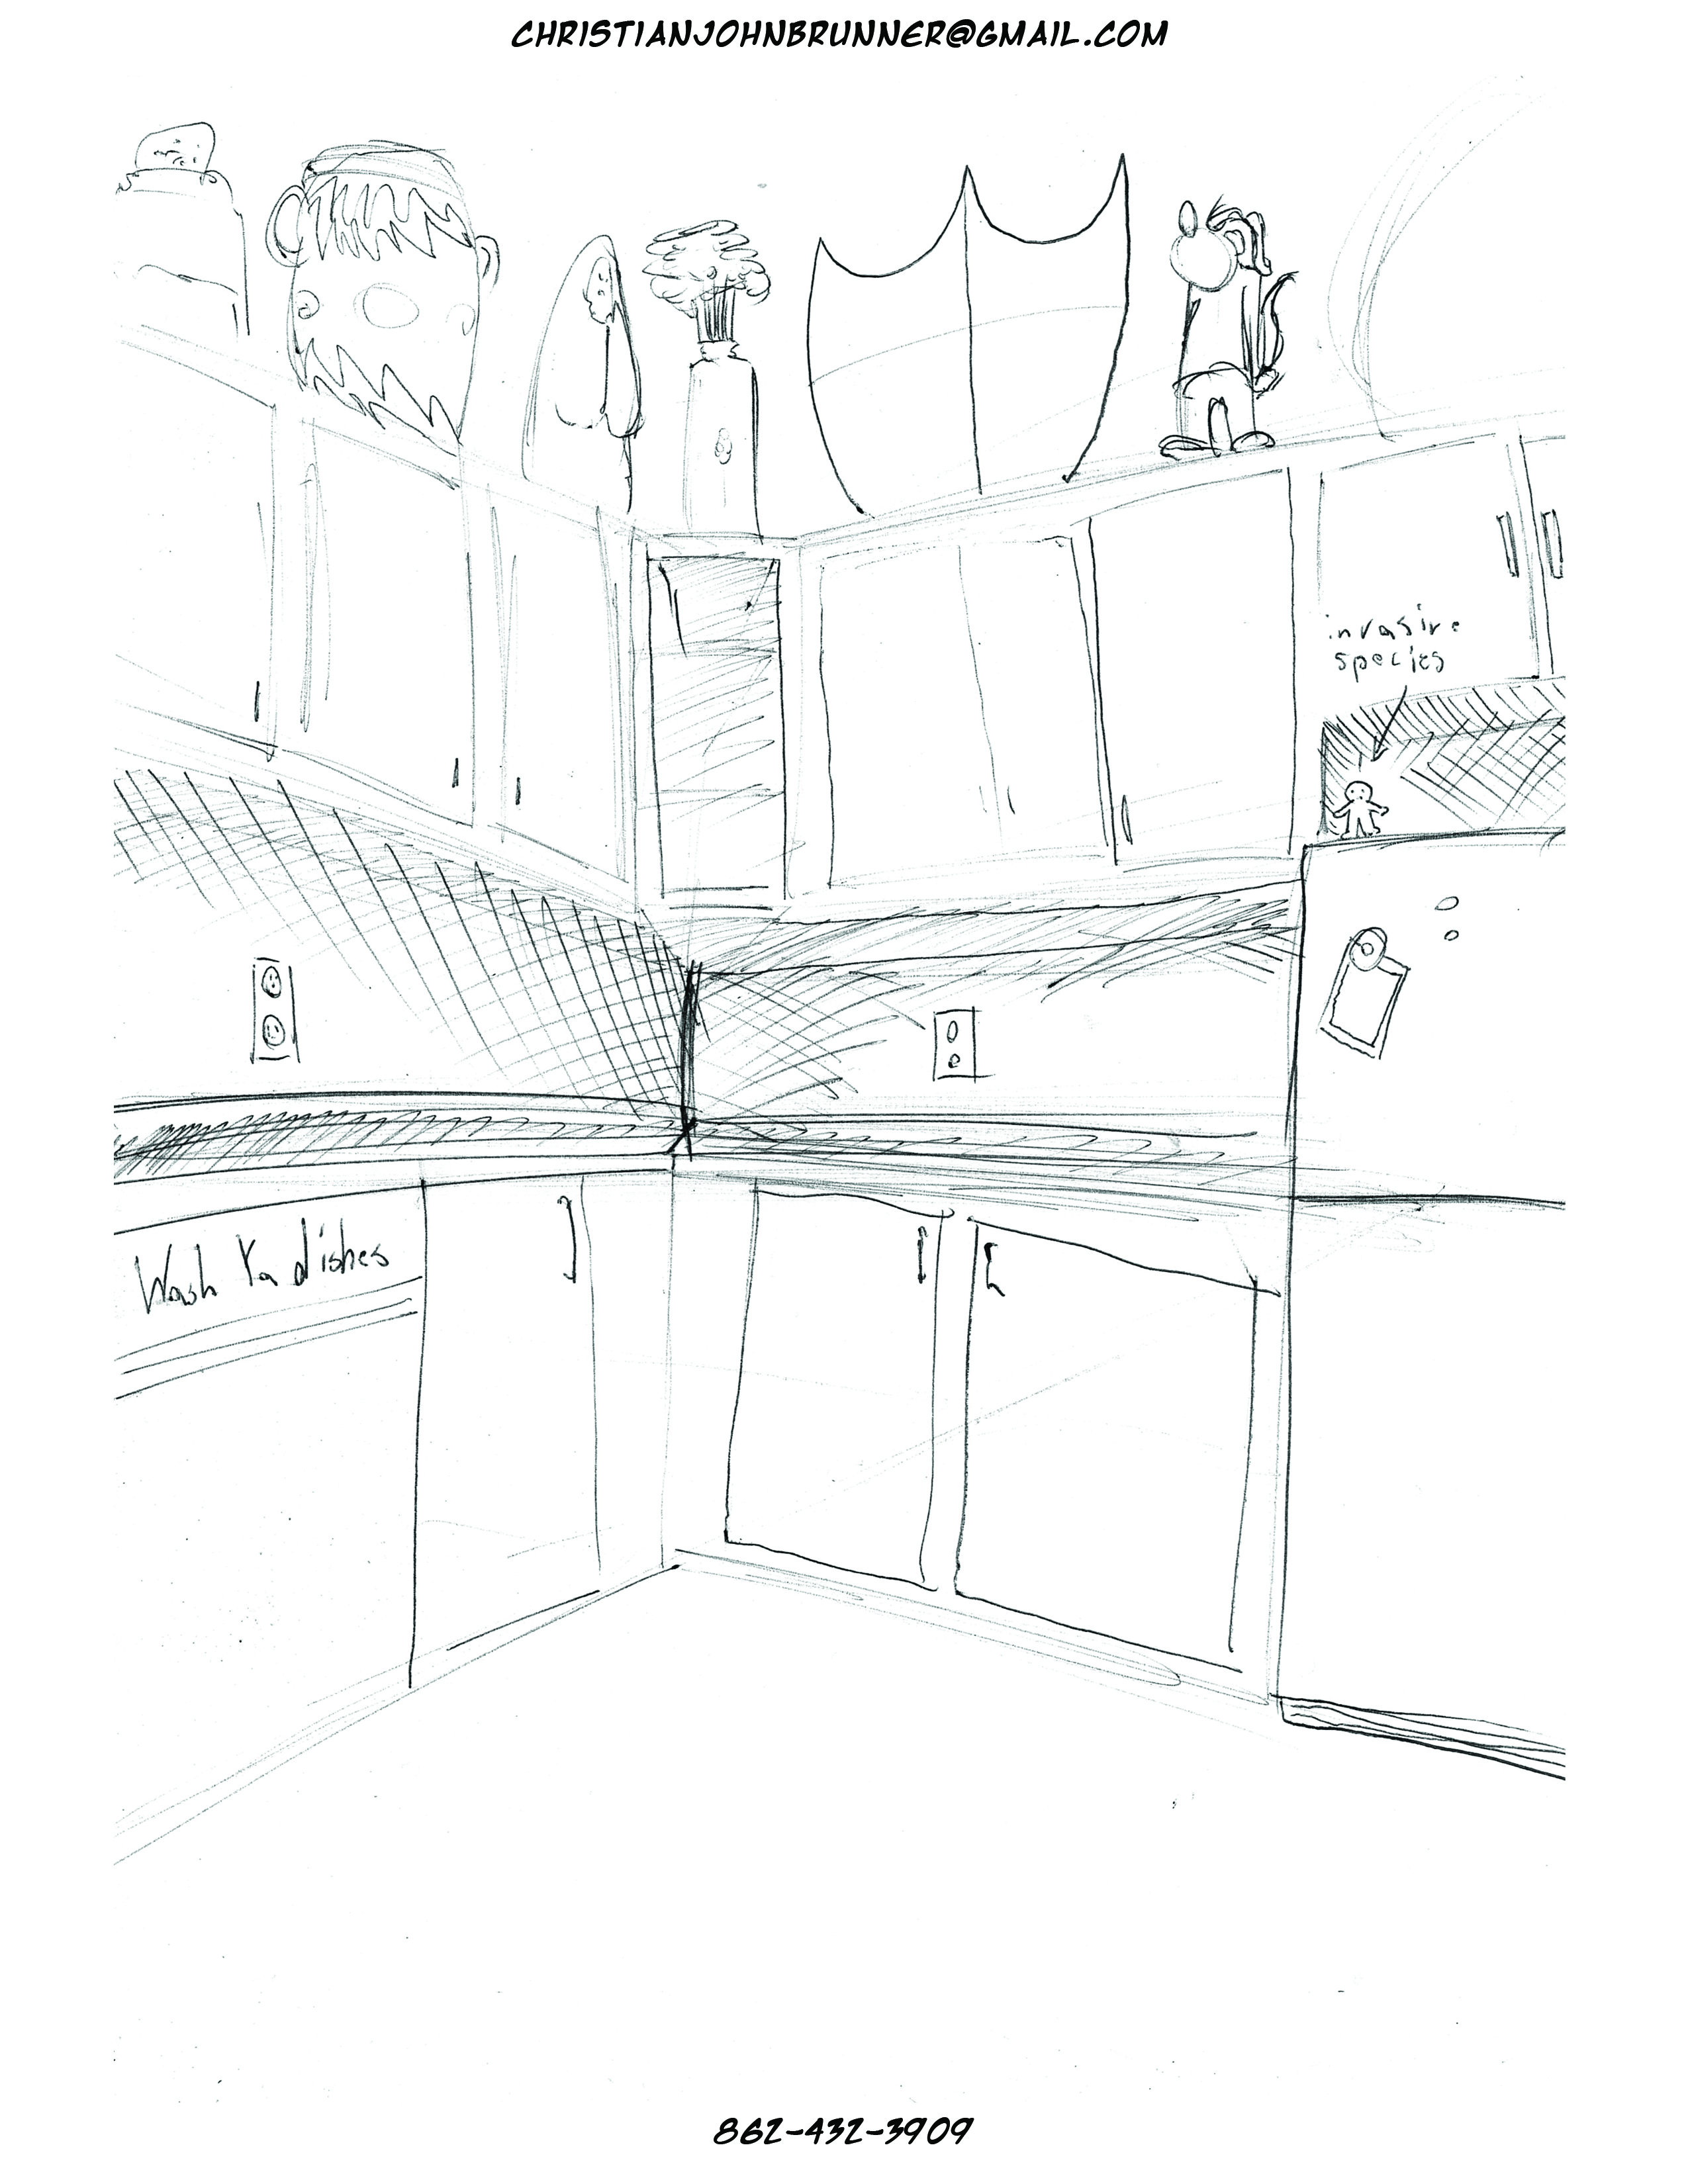 Sketch of a Kitchen